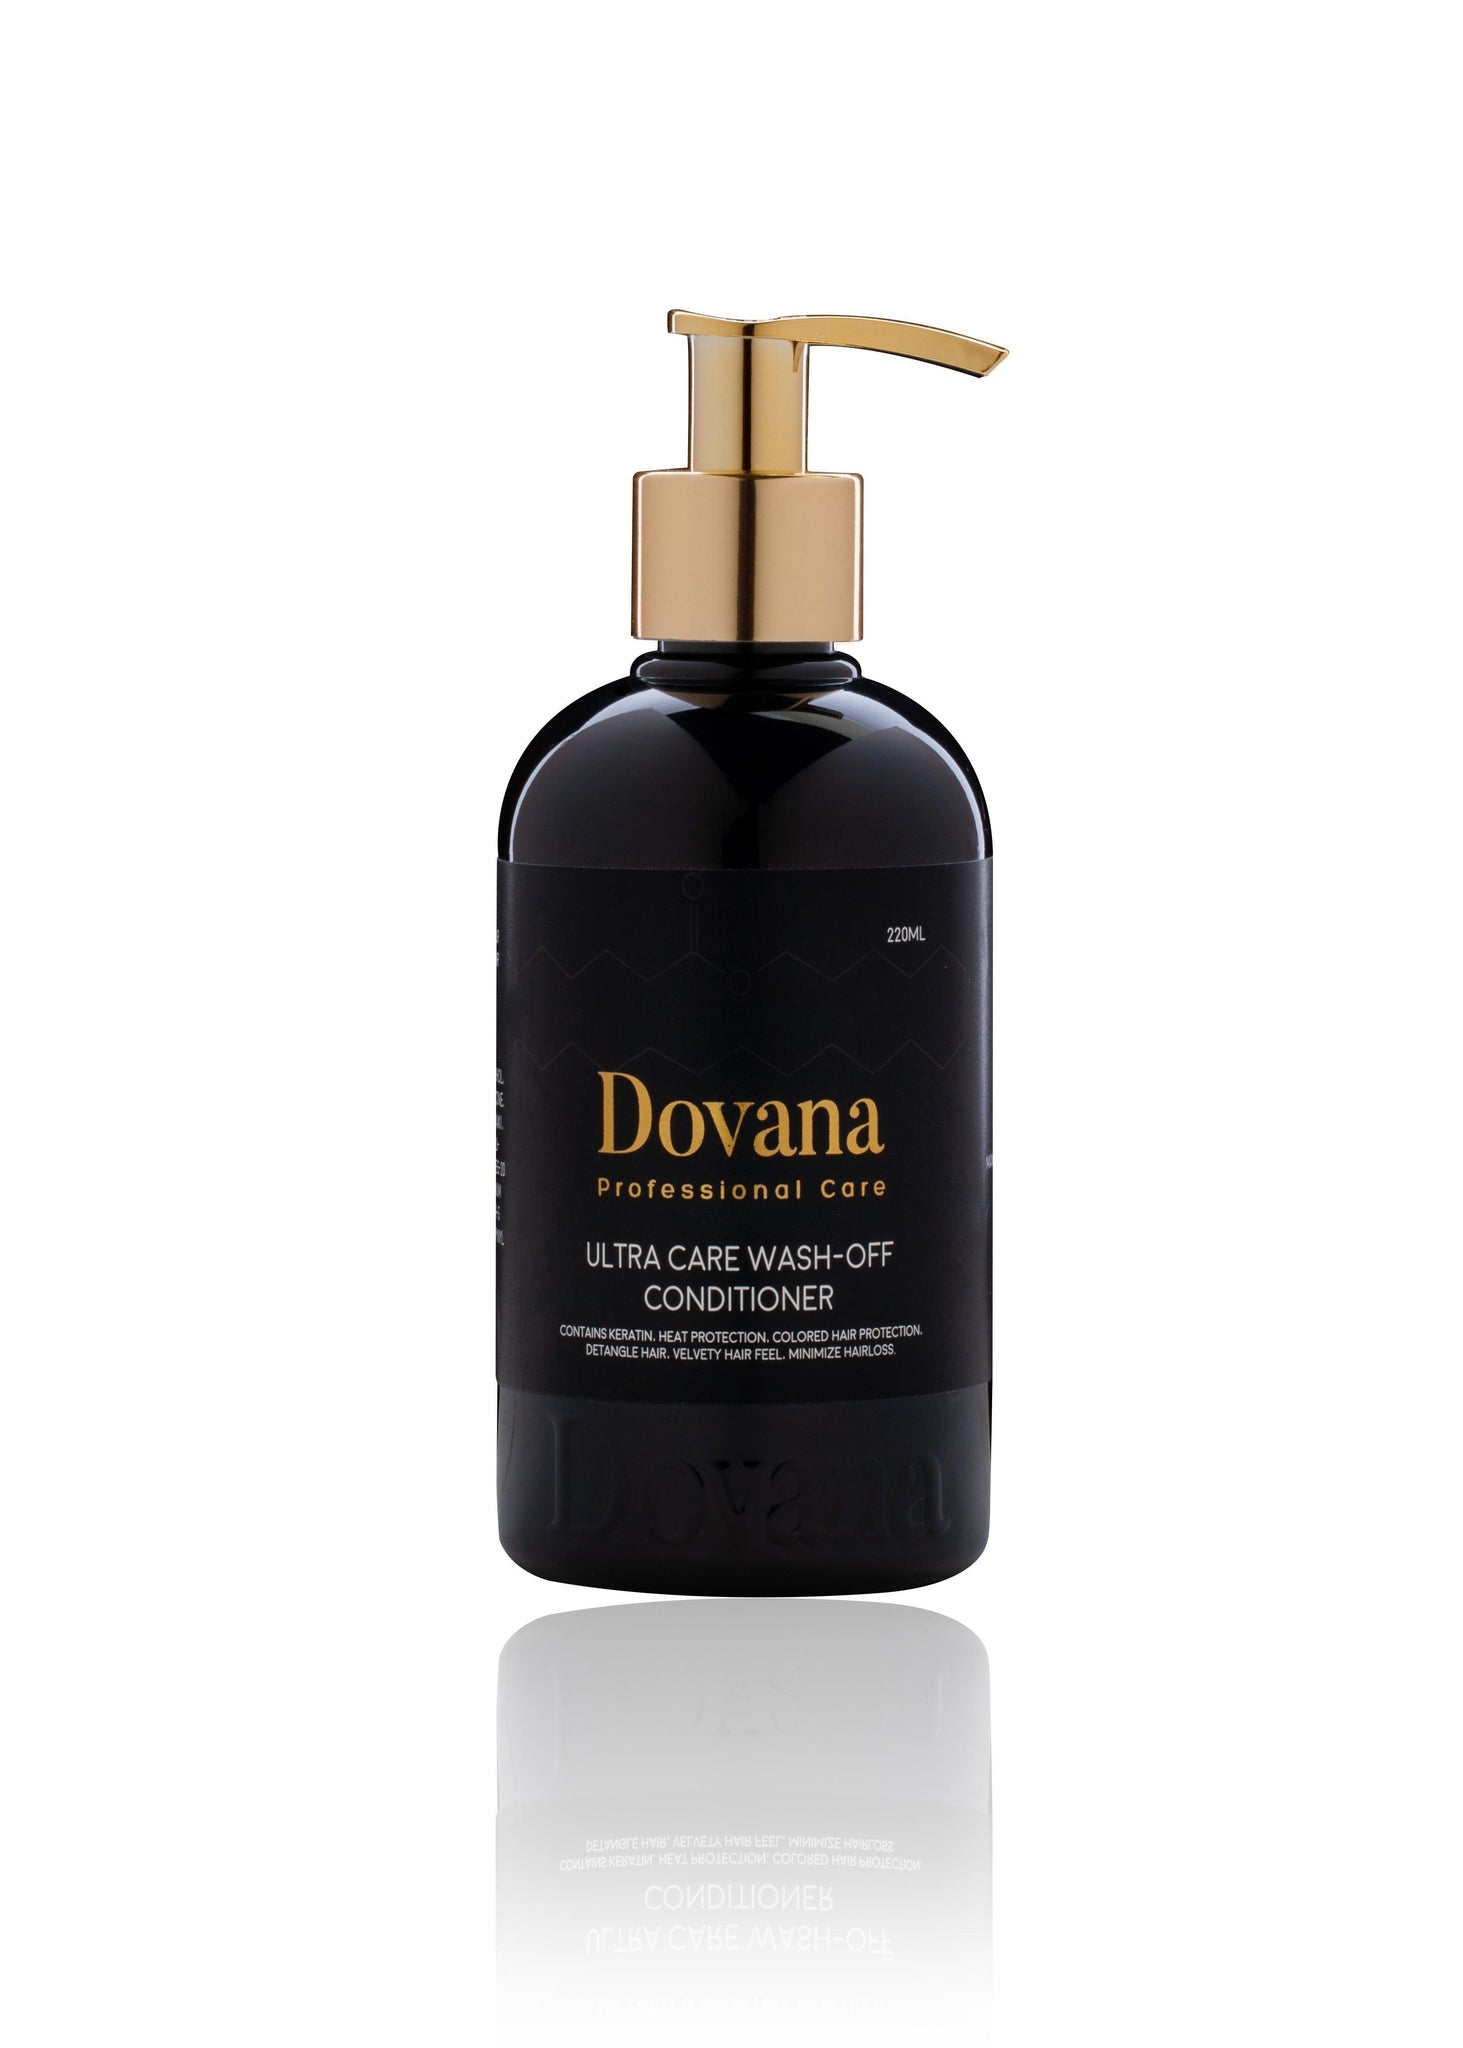 Dovana’s Ultra Care Wash-off Conditioner 200 ml - Mrayti Store